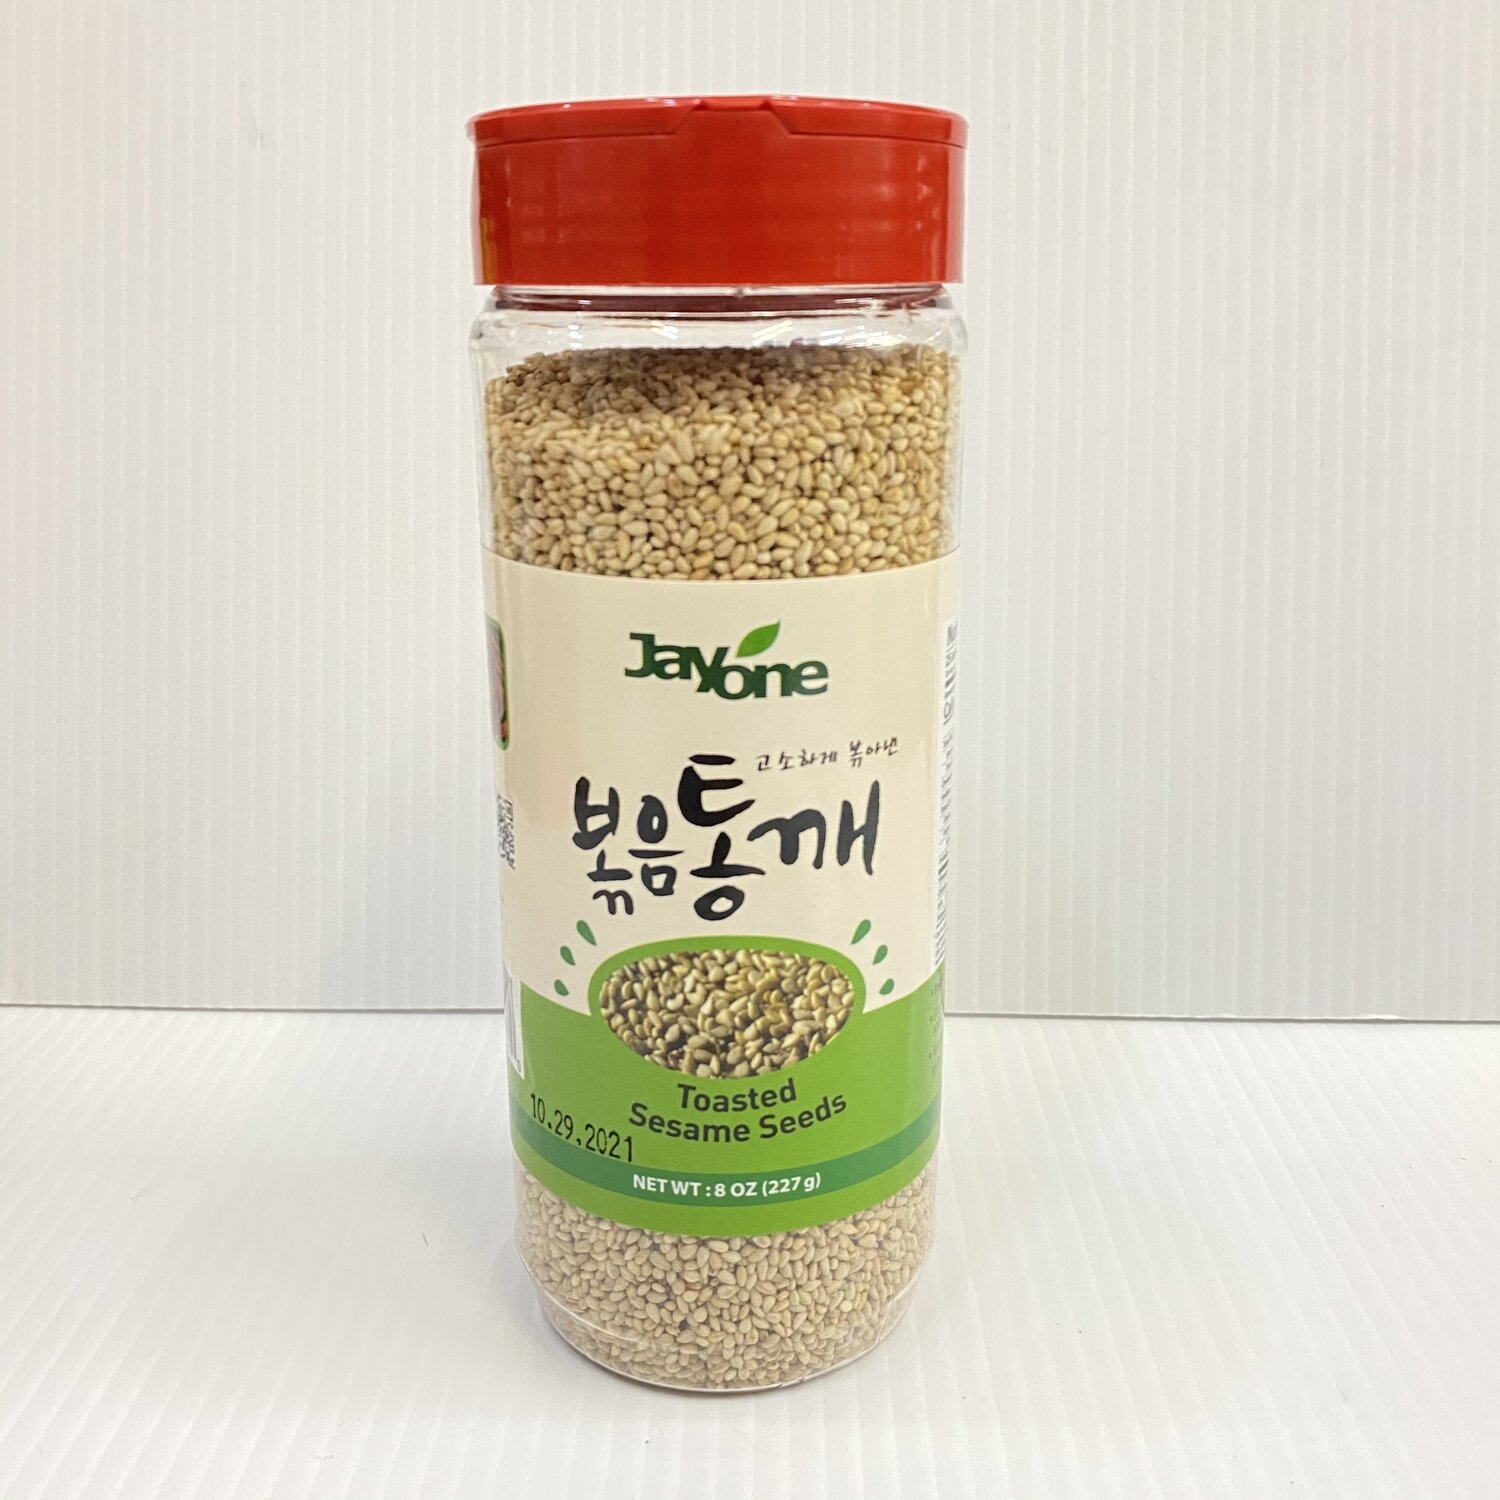 GROC【杂货】韩国烤白芝麻 8oz(227g)